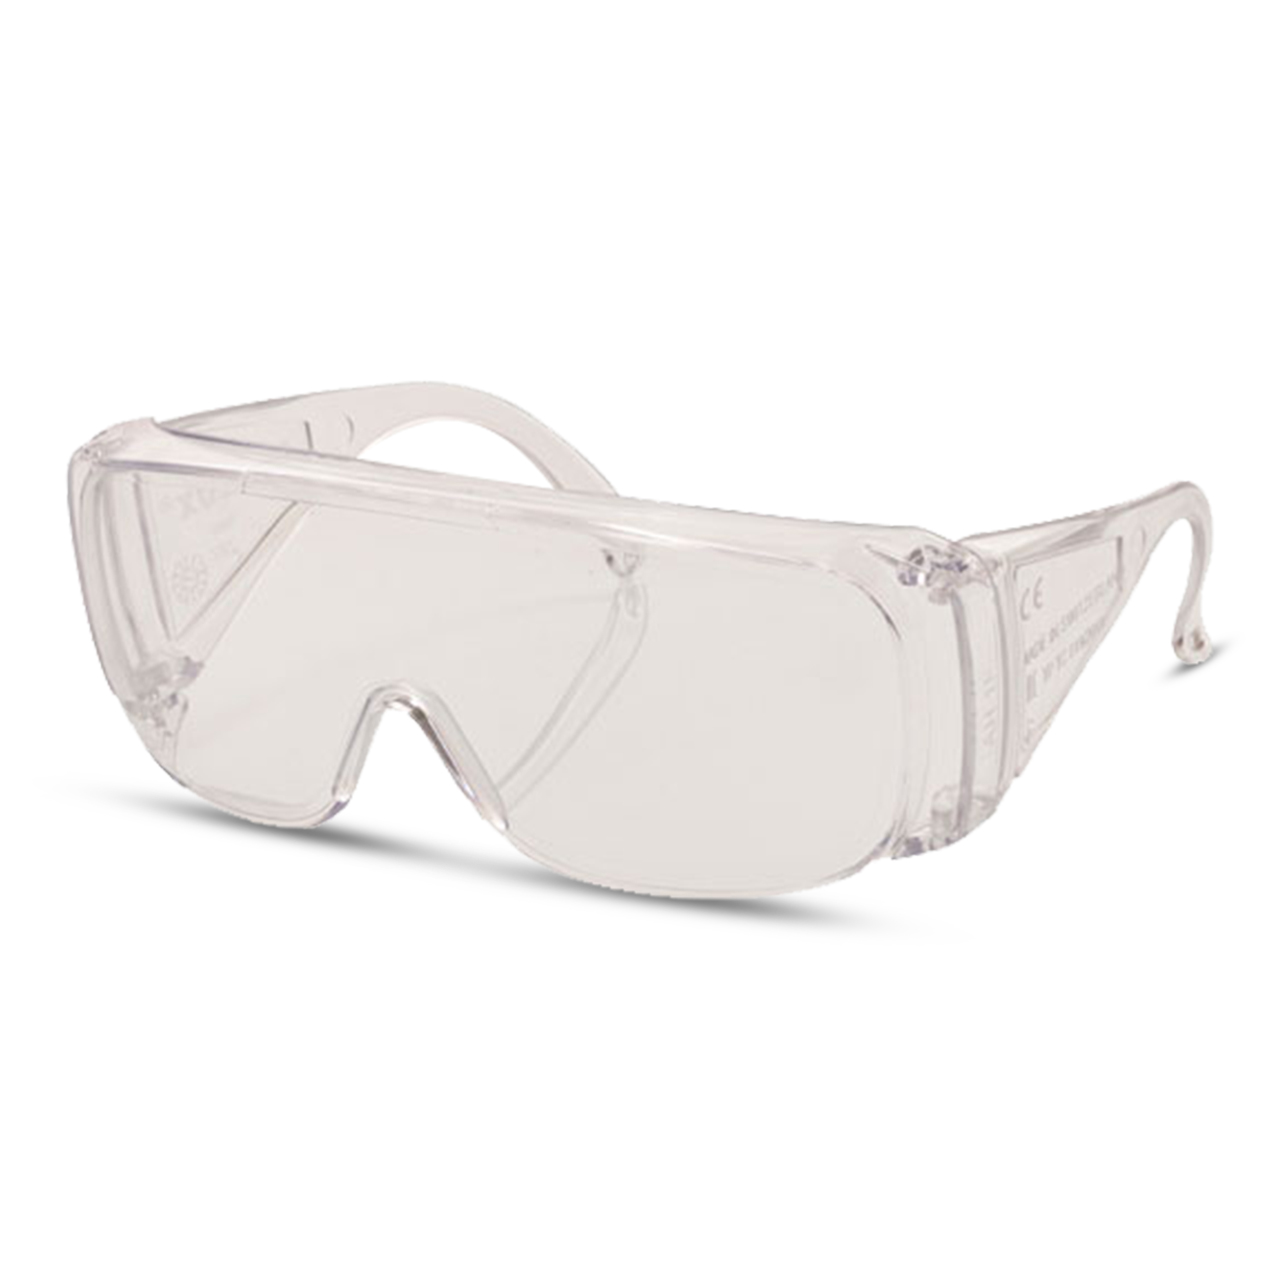 ARTISPEC® 400 Überbrille clear / clear